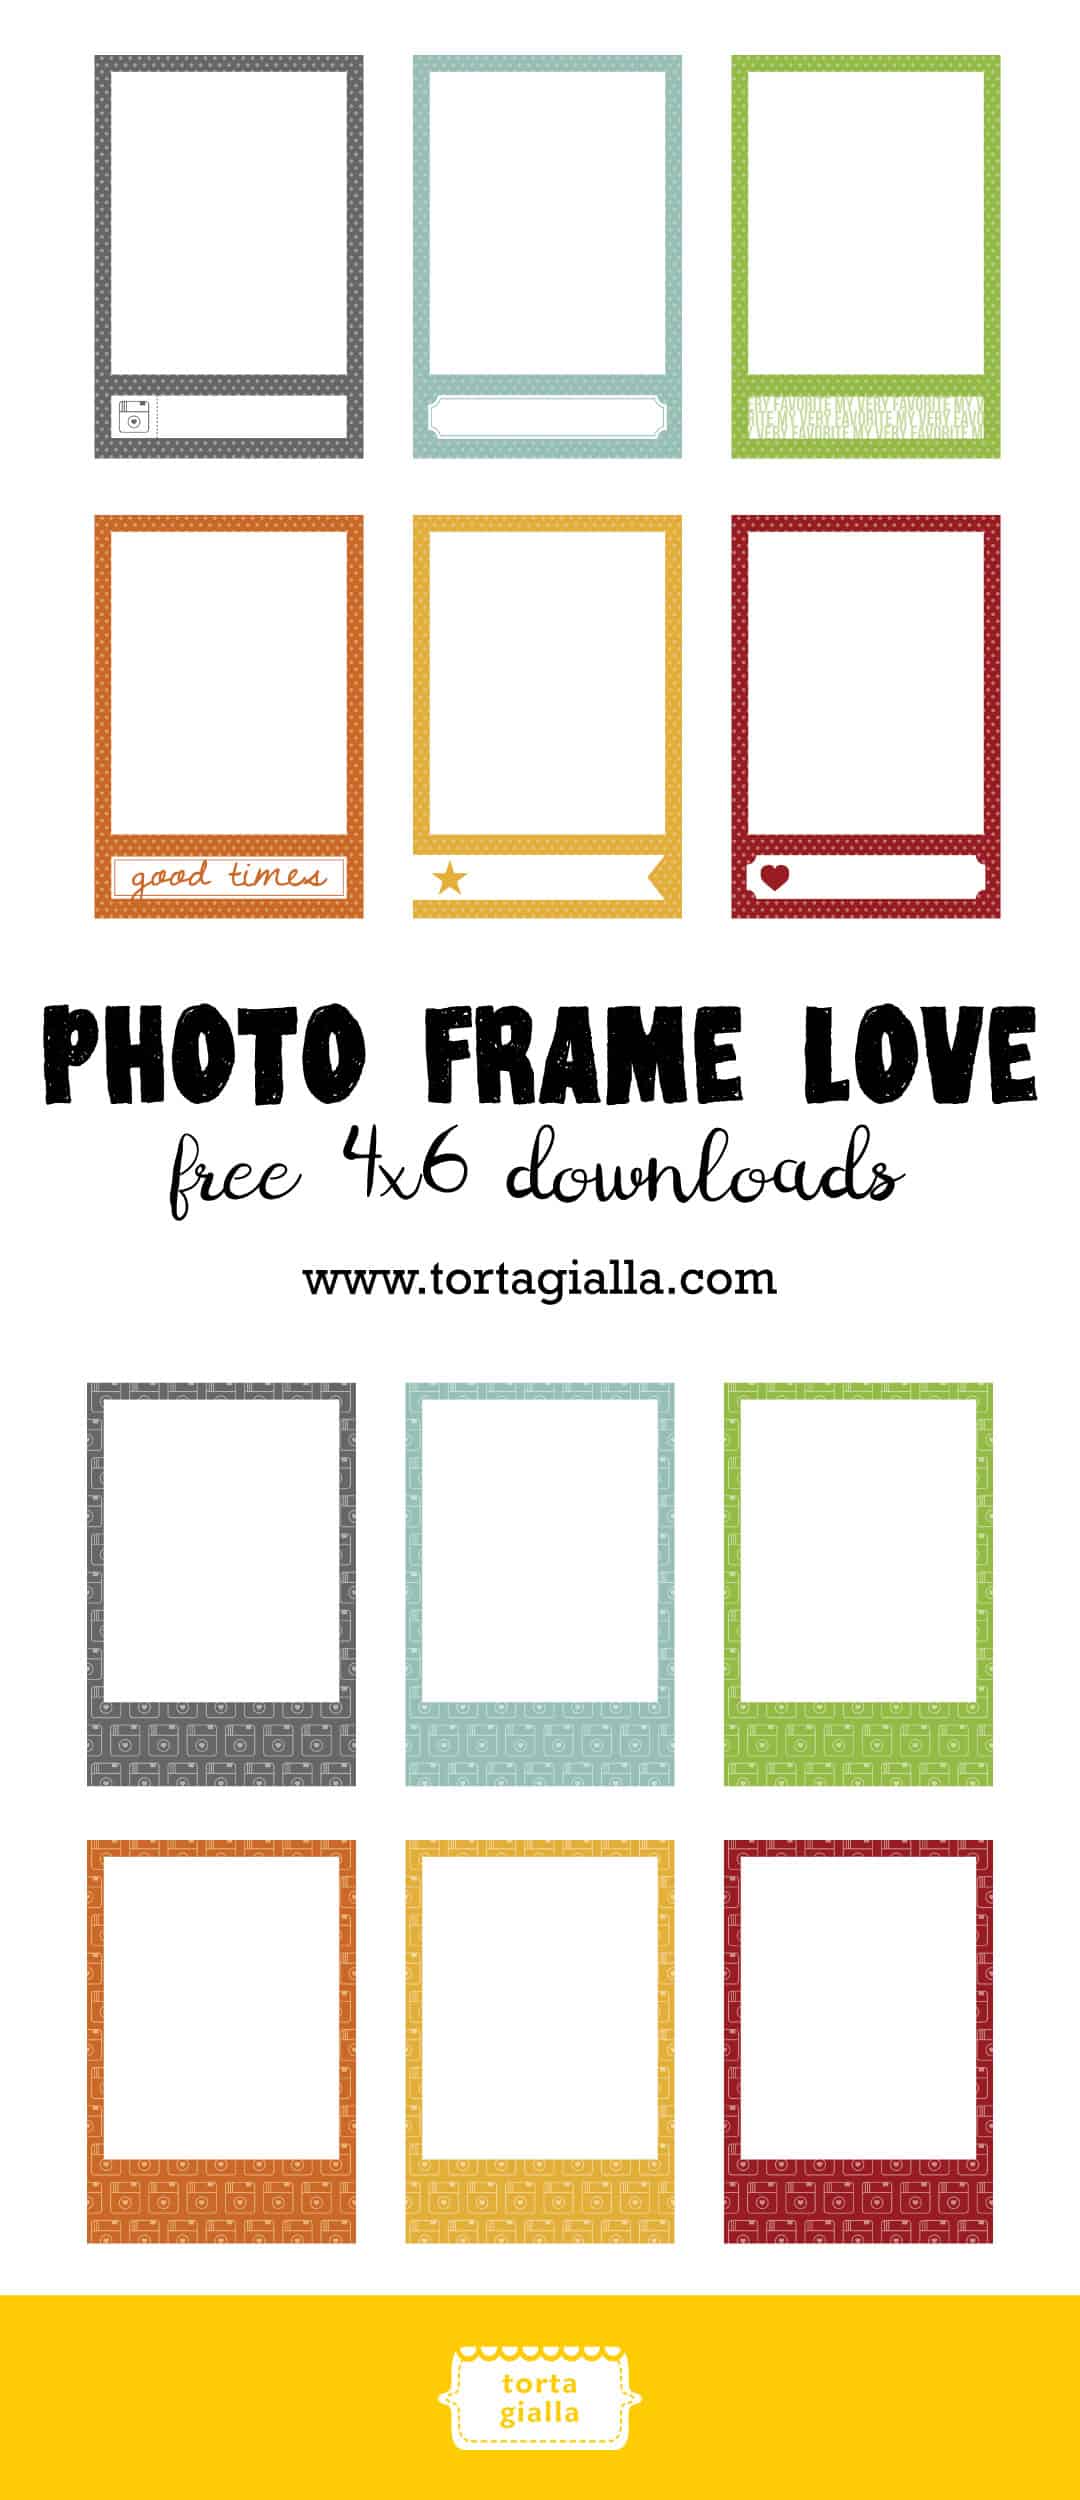 free 4x6 photo frame downloads on tortagialla.com